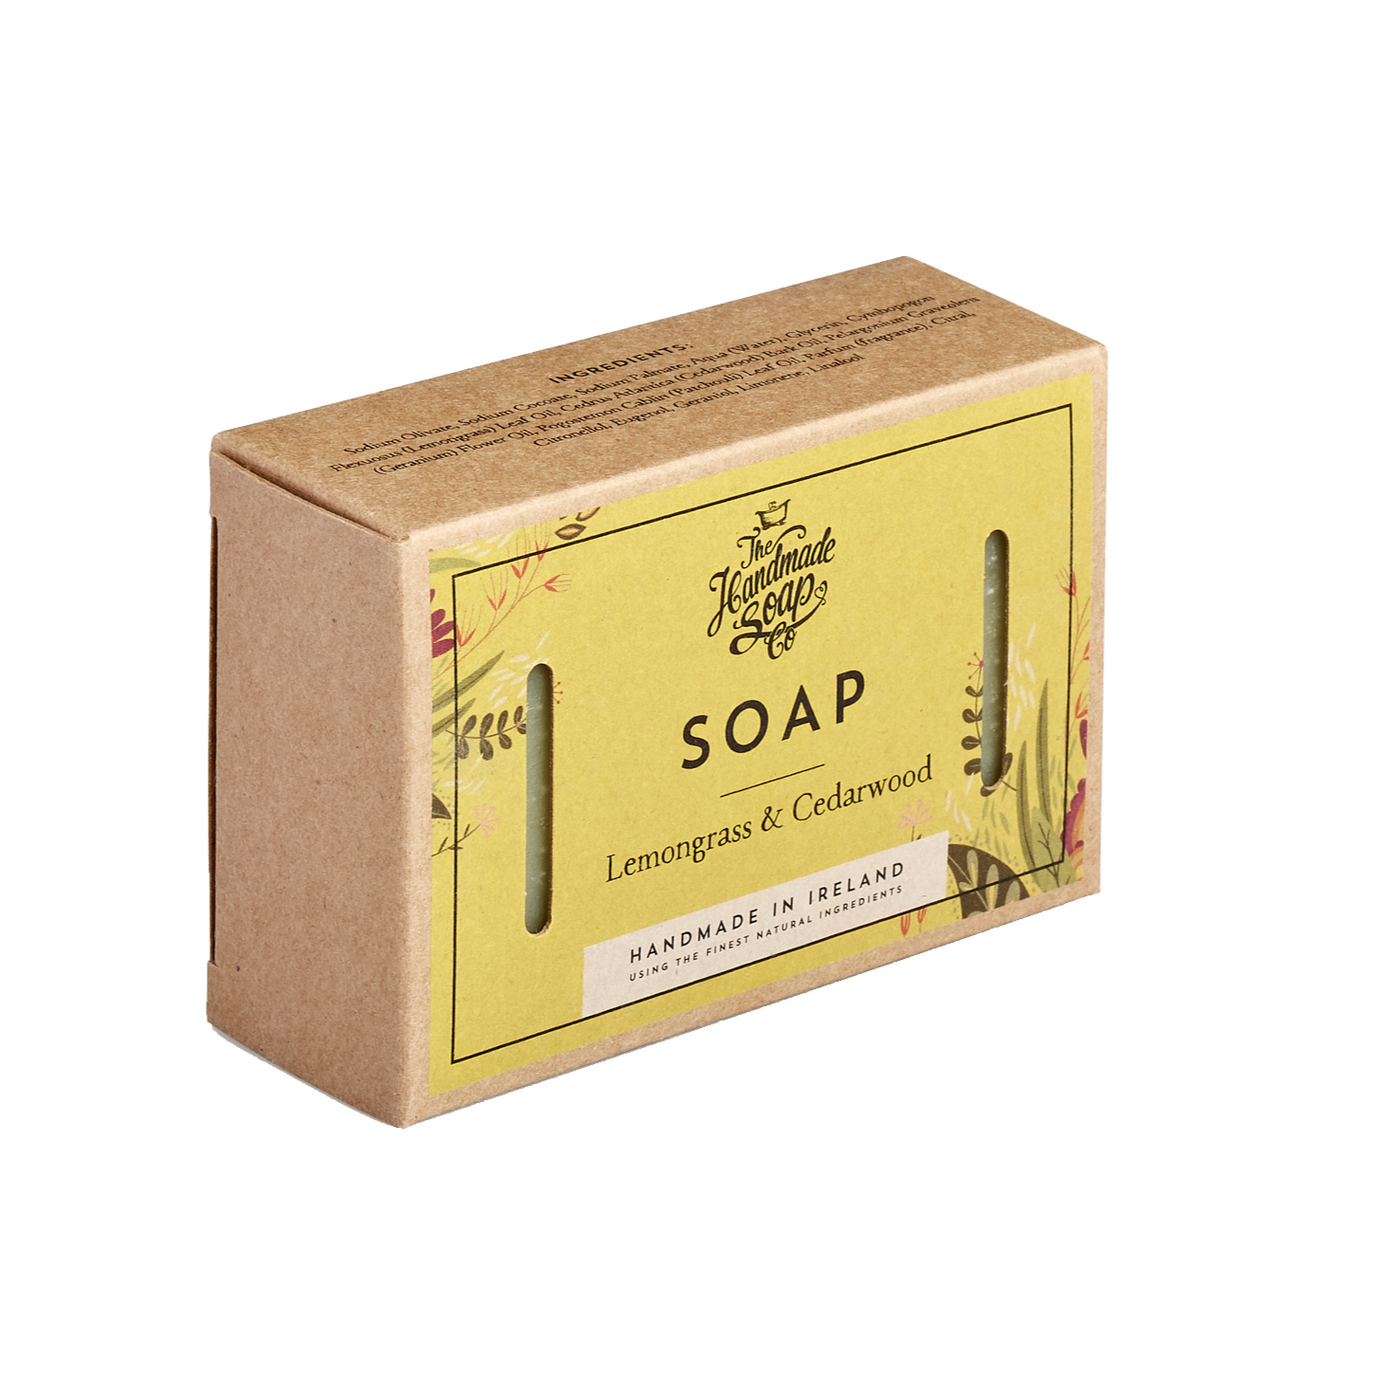 The Handmade Soap Company Soap Bar - Lemongrass & Cedarwood